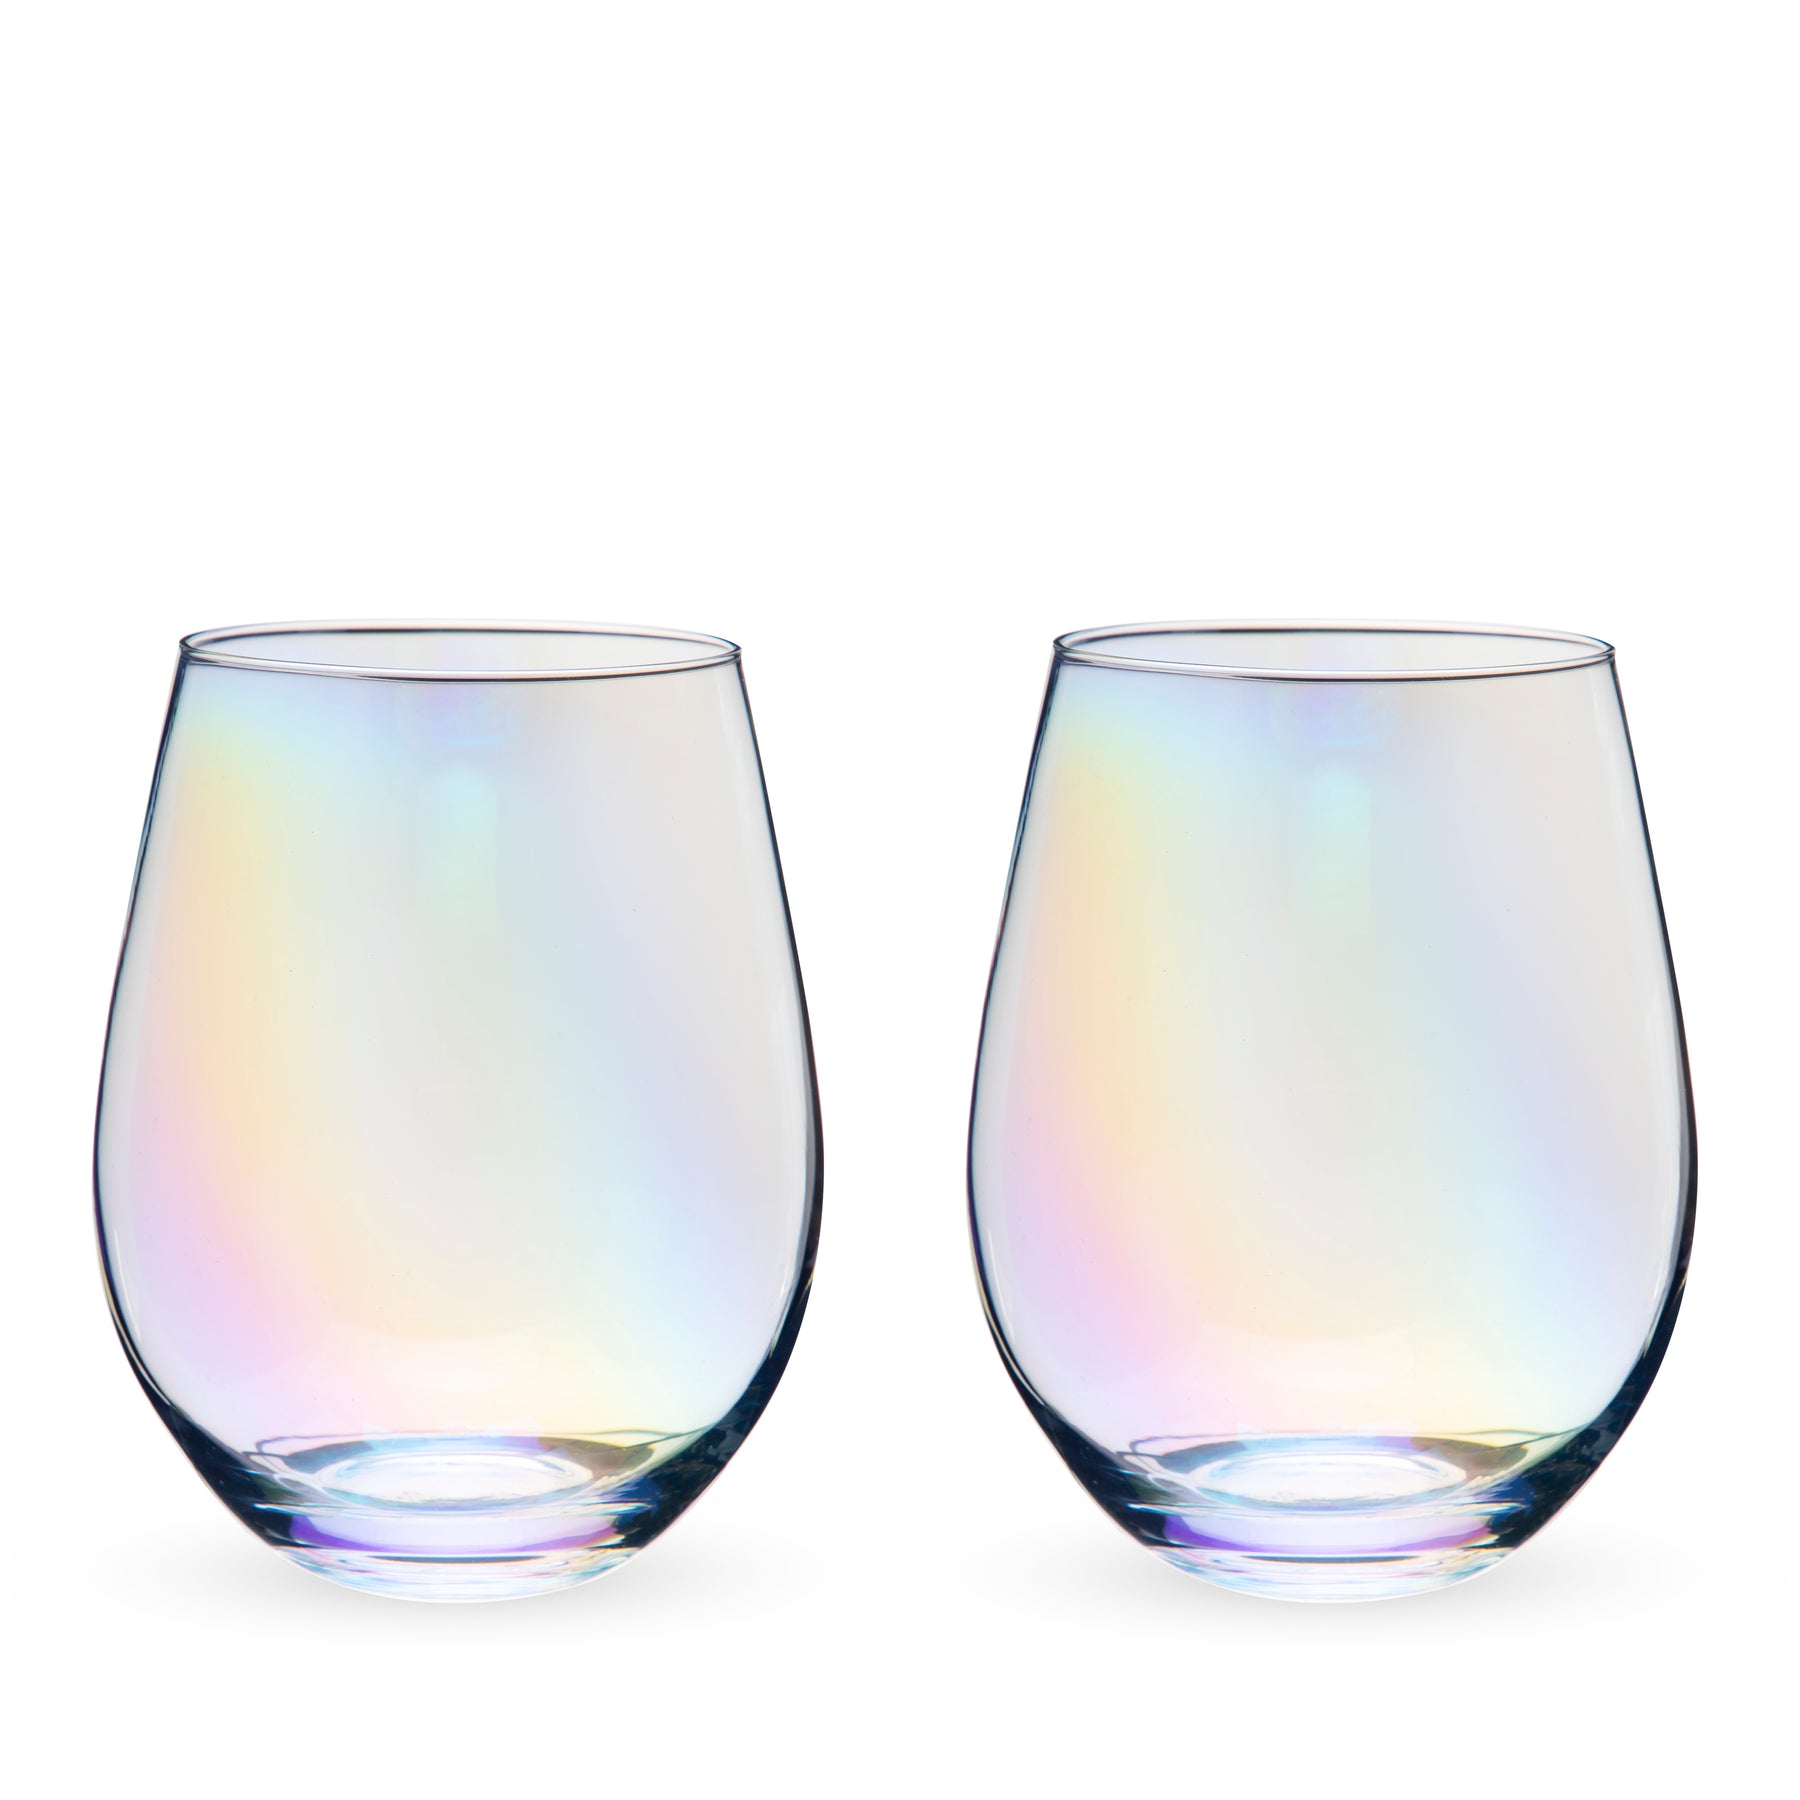 Turbulence Red Wine Glasses Set of 2 (11.8 oz) – Crystal Decor